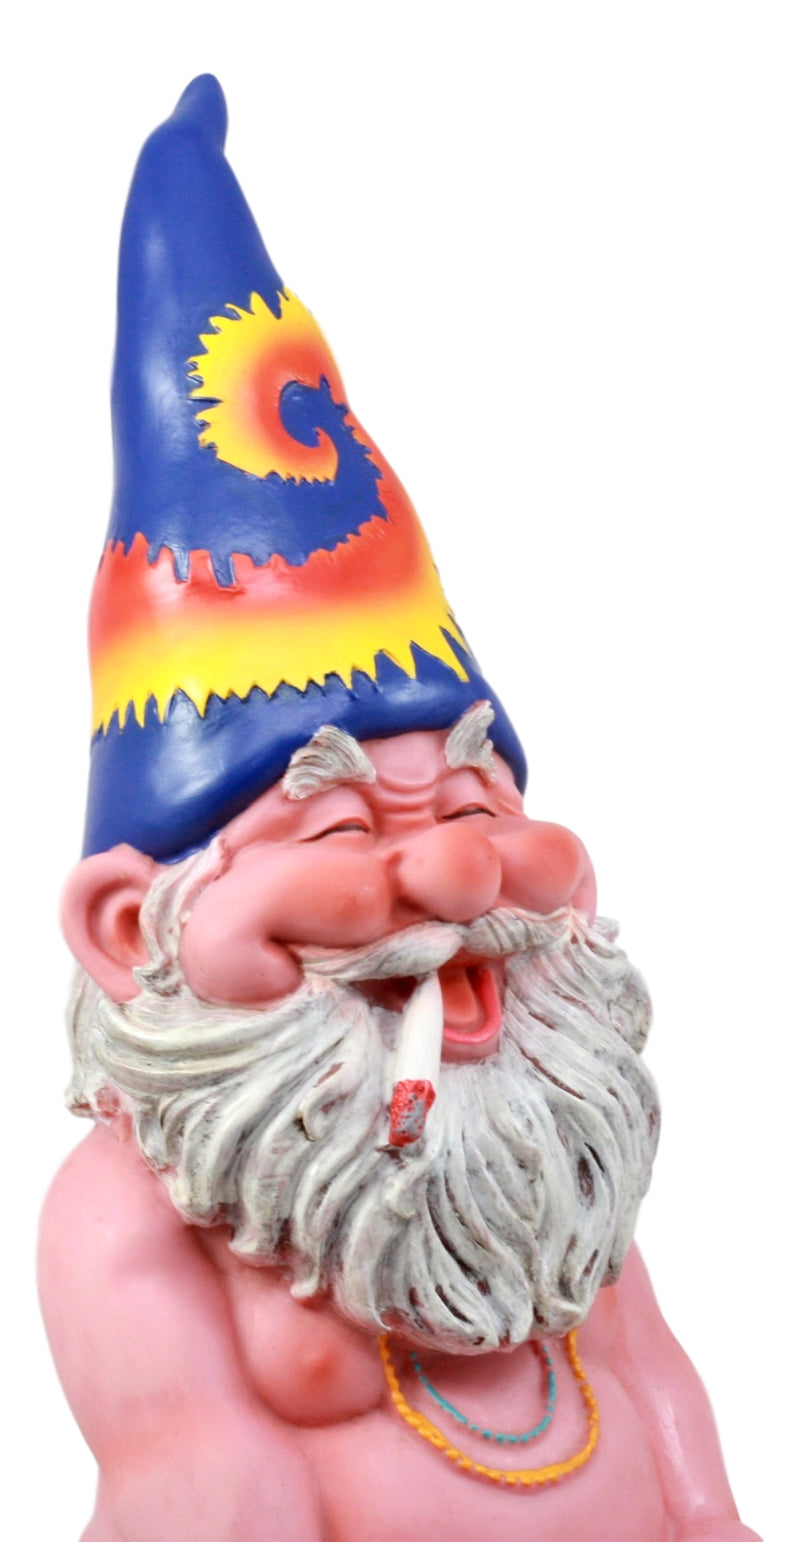 Ebros Free Spirited Smoking Naked Hippie Gnome Statue 13.5"H